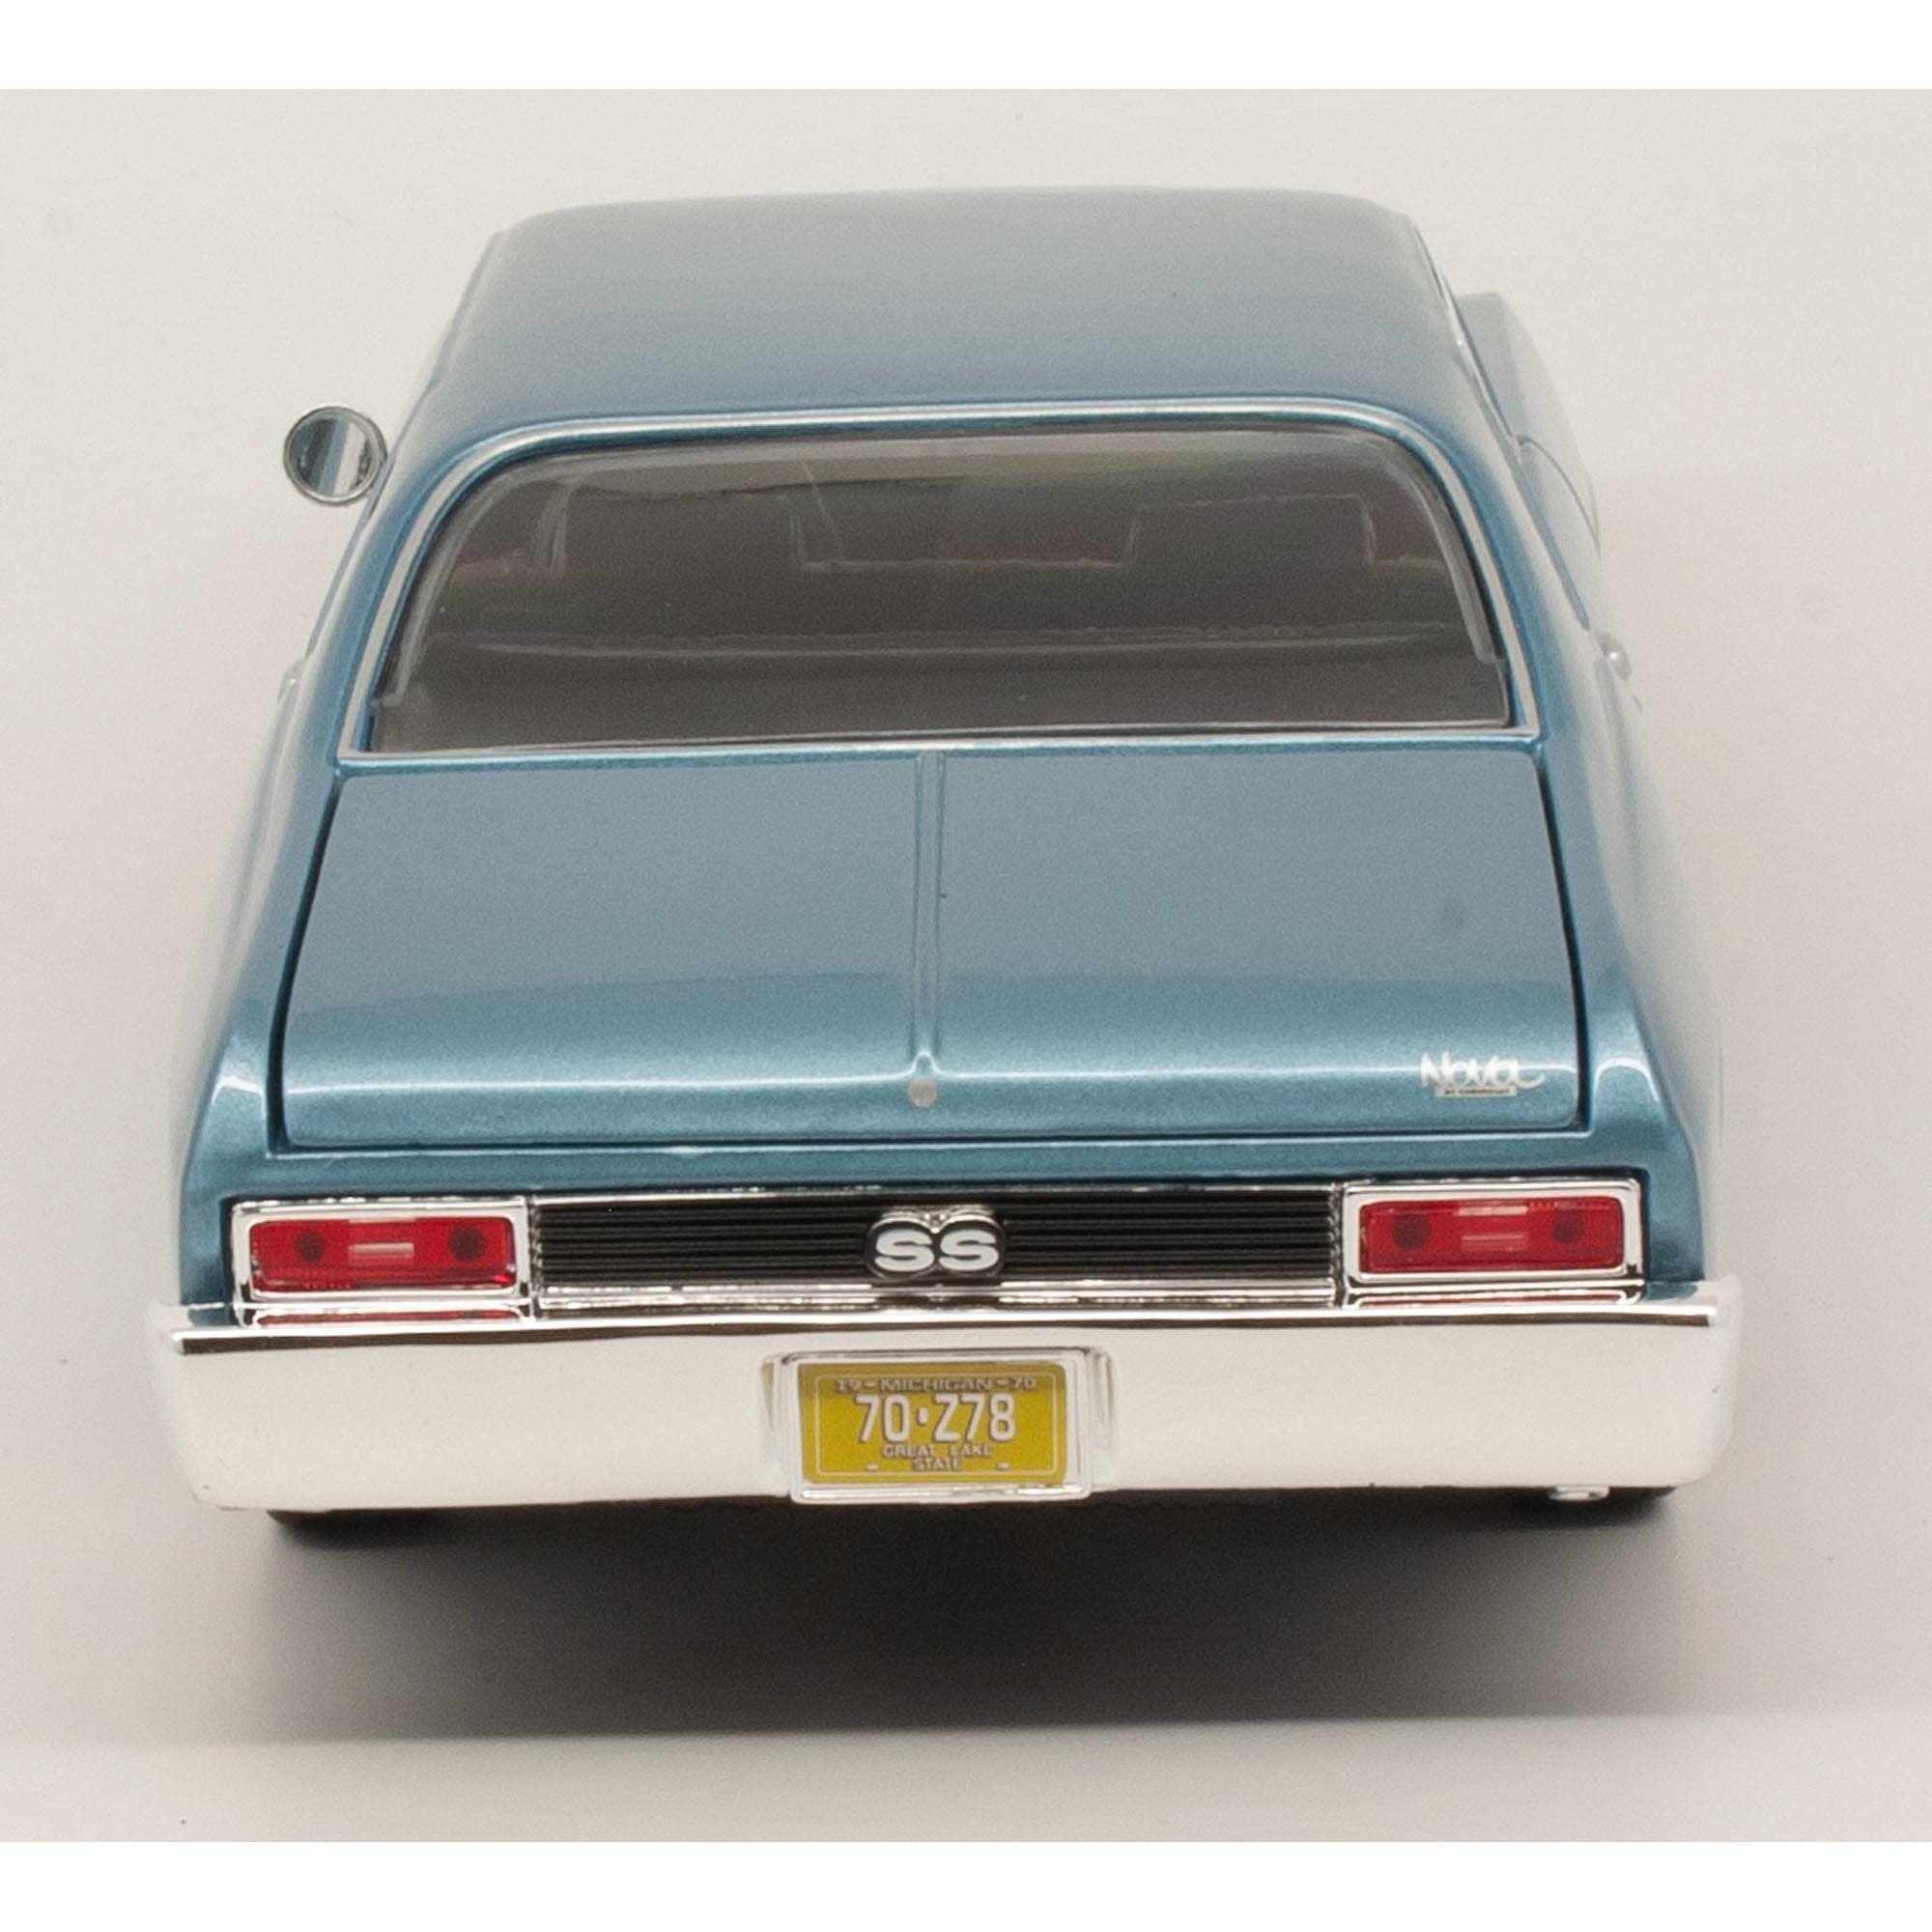 1970 Chevy Nova SS Coupe, Blue - Maisto 31132 - 1/18 scale diecast model car by Maisto